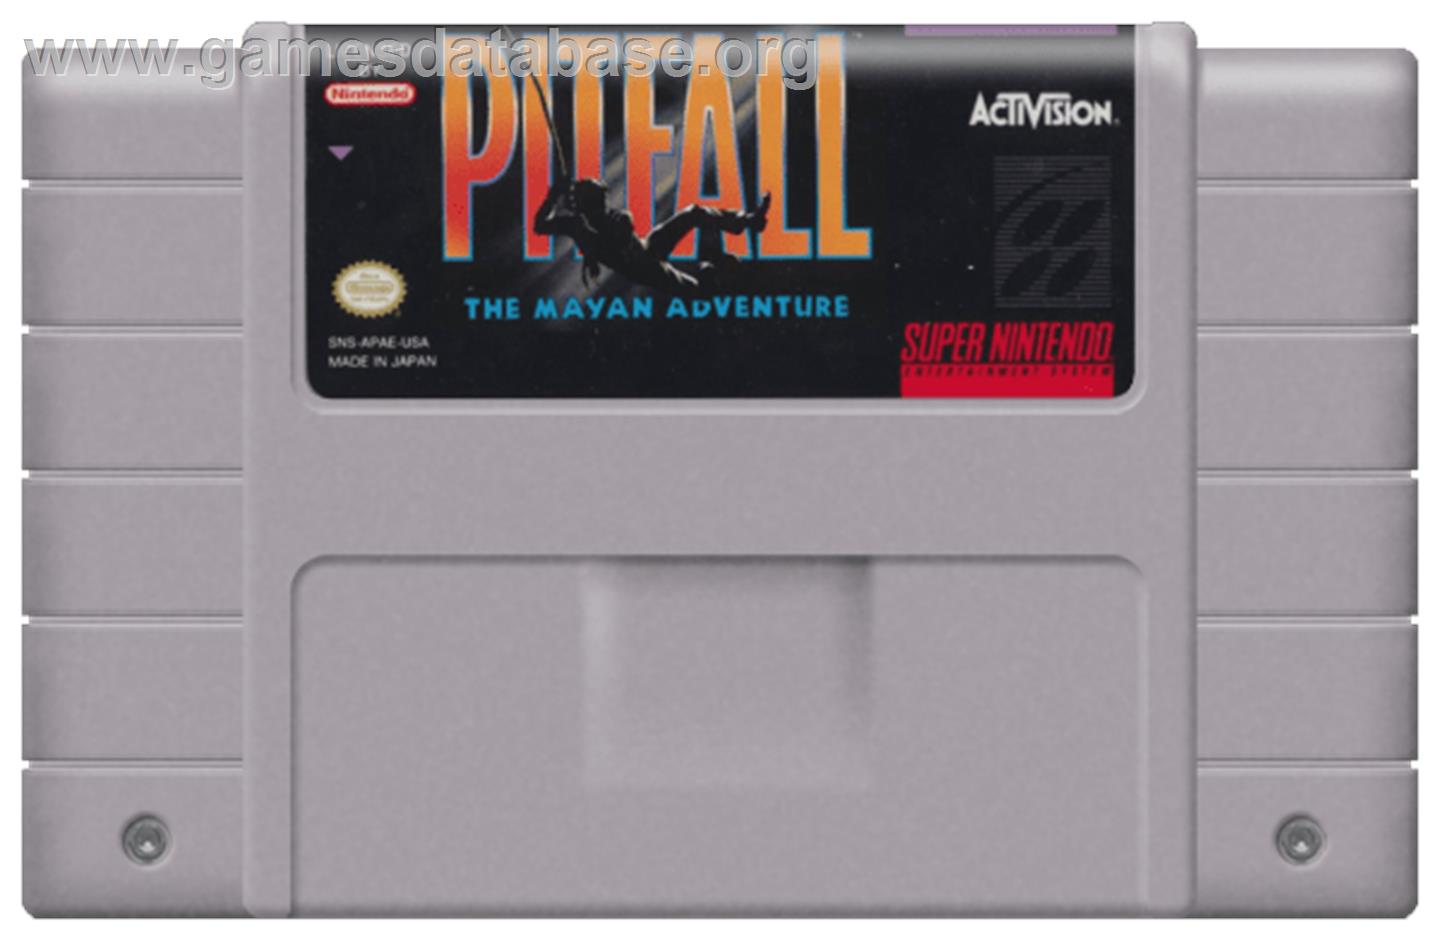 Pitfall: The Mayan Adventure - Nintendo SNES - Artwork - Cartridge